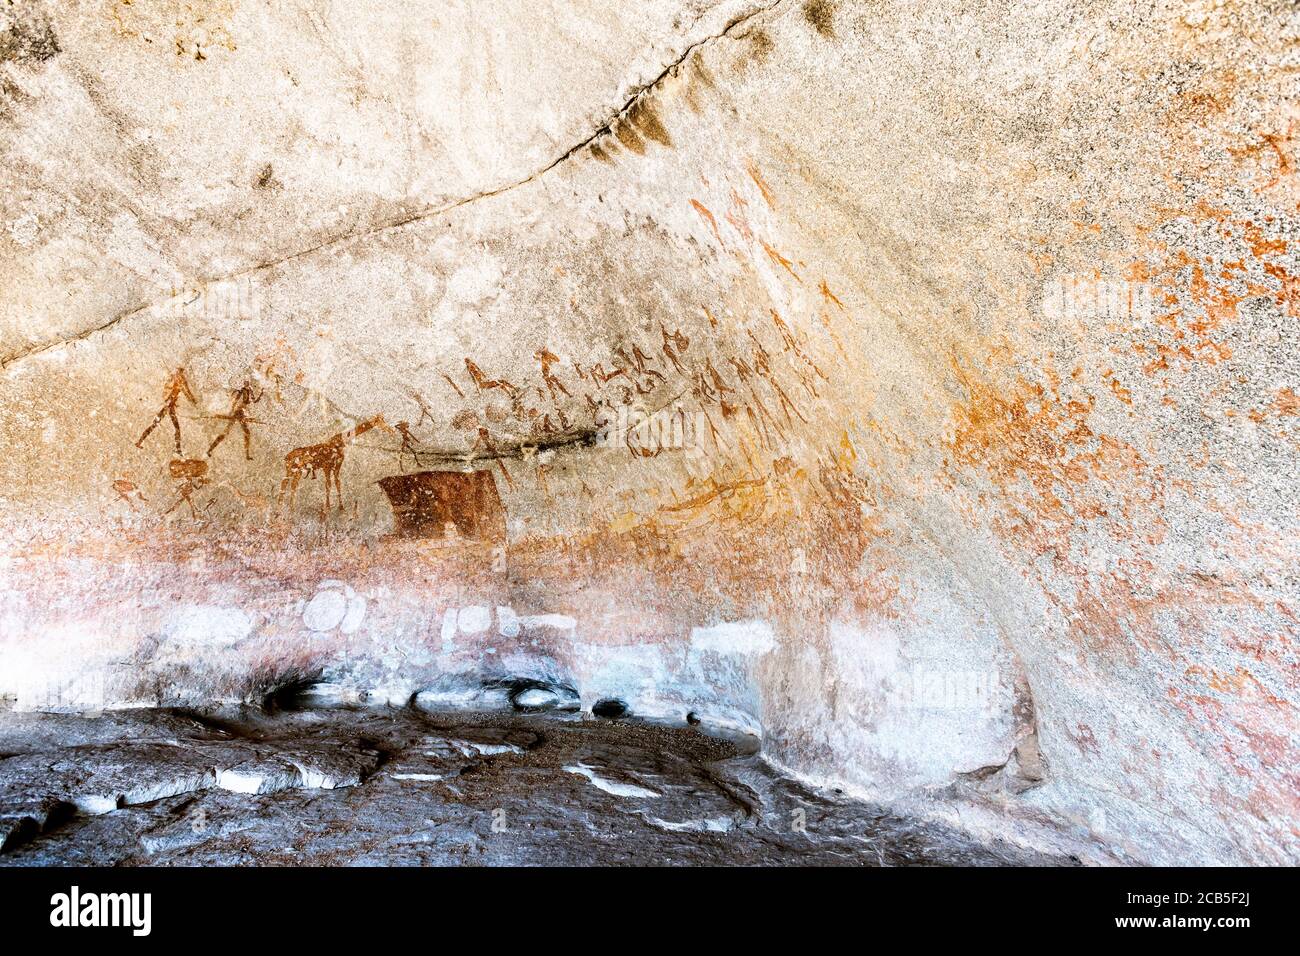 Matobo hills, 'Silozwane cave' rock painting site, rock art, Matobo National Park, suburbs of Bulawayo, Matabeleland South, Zimbabwe, Africa Stock Photo